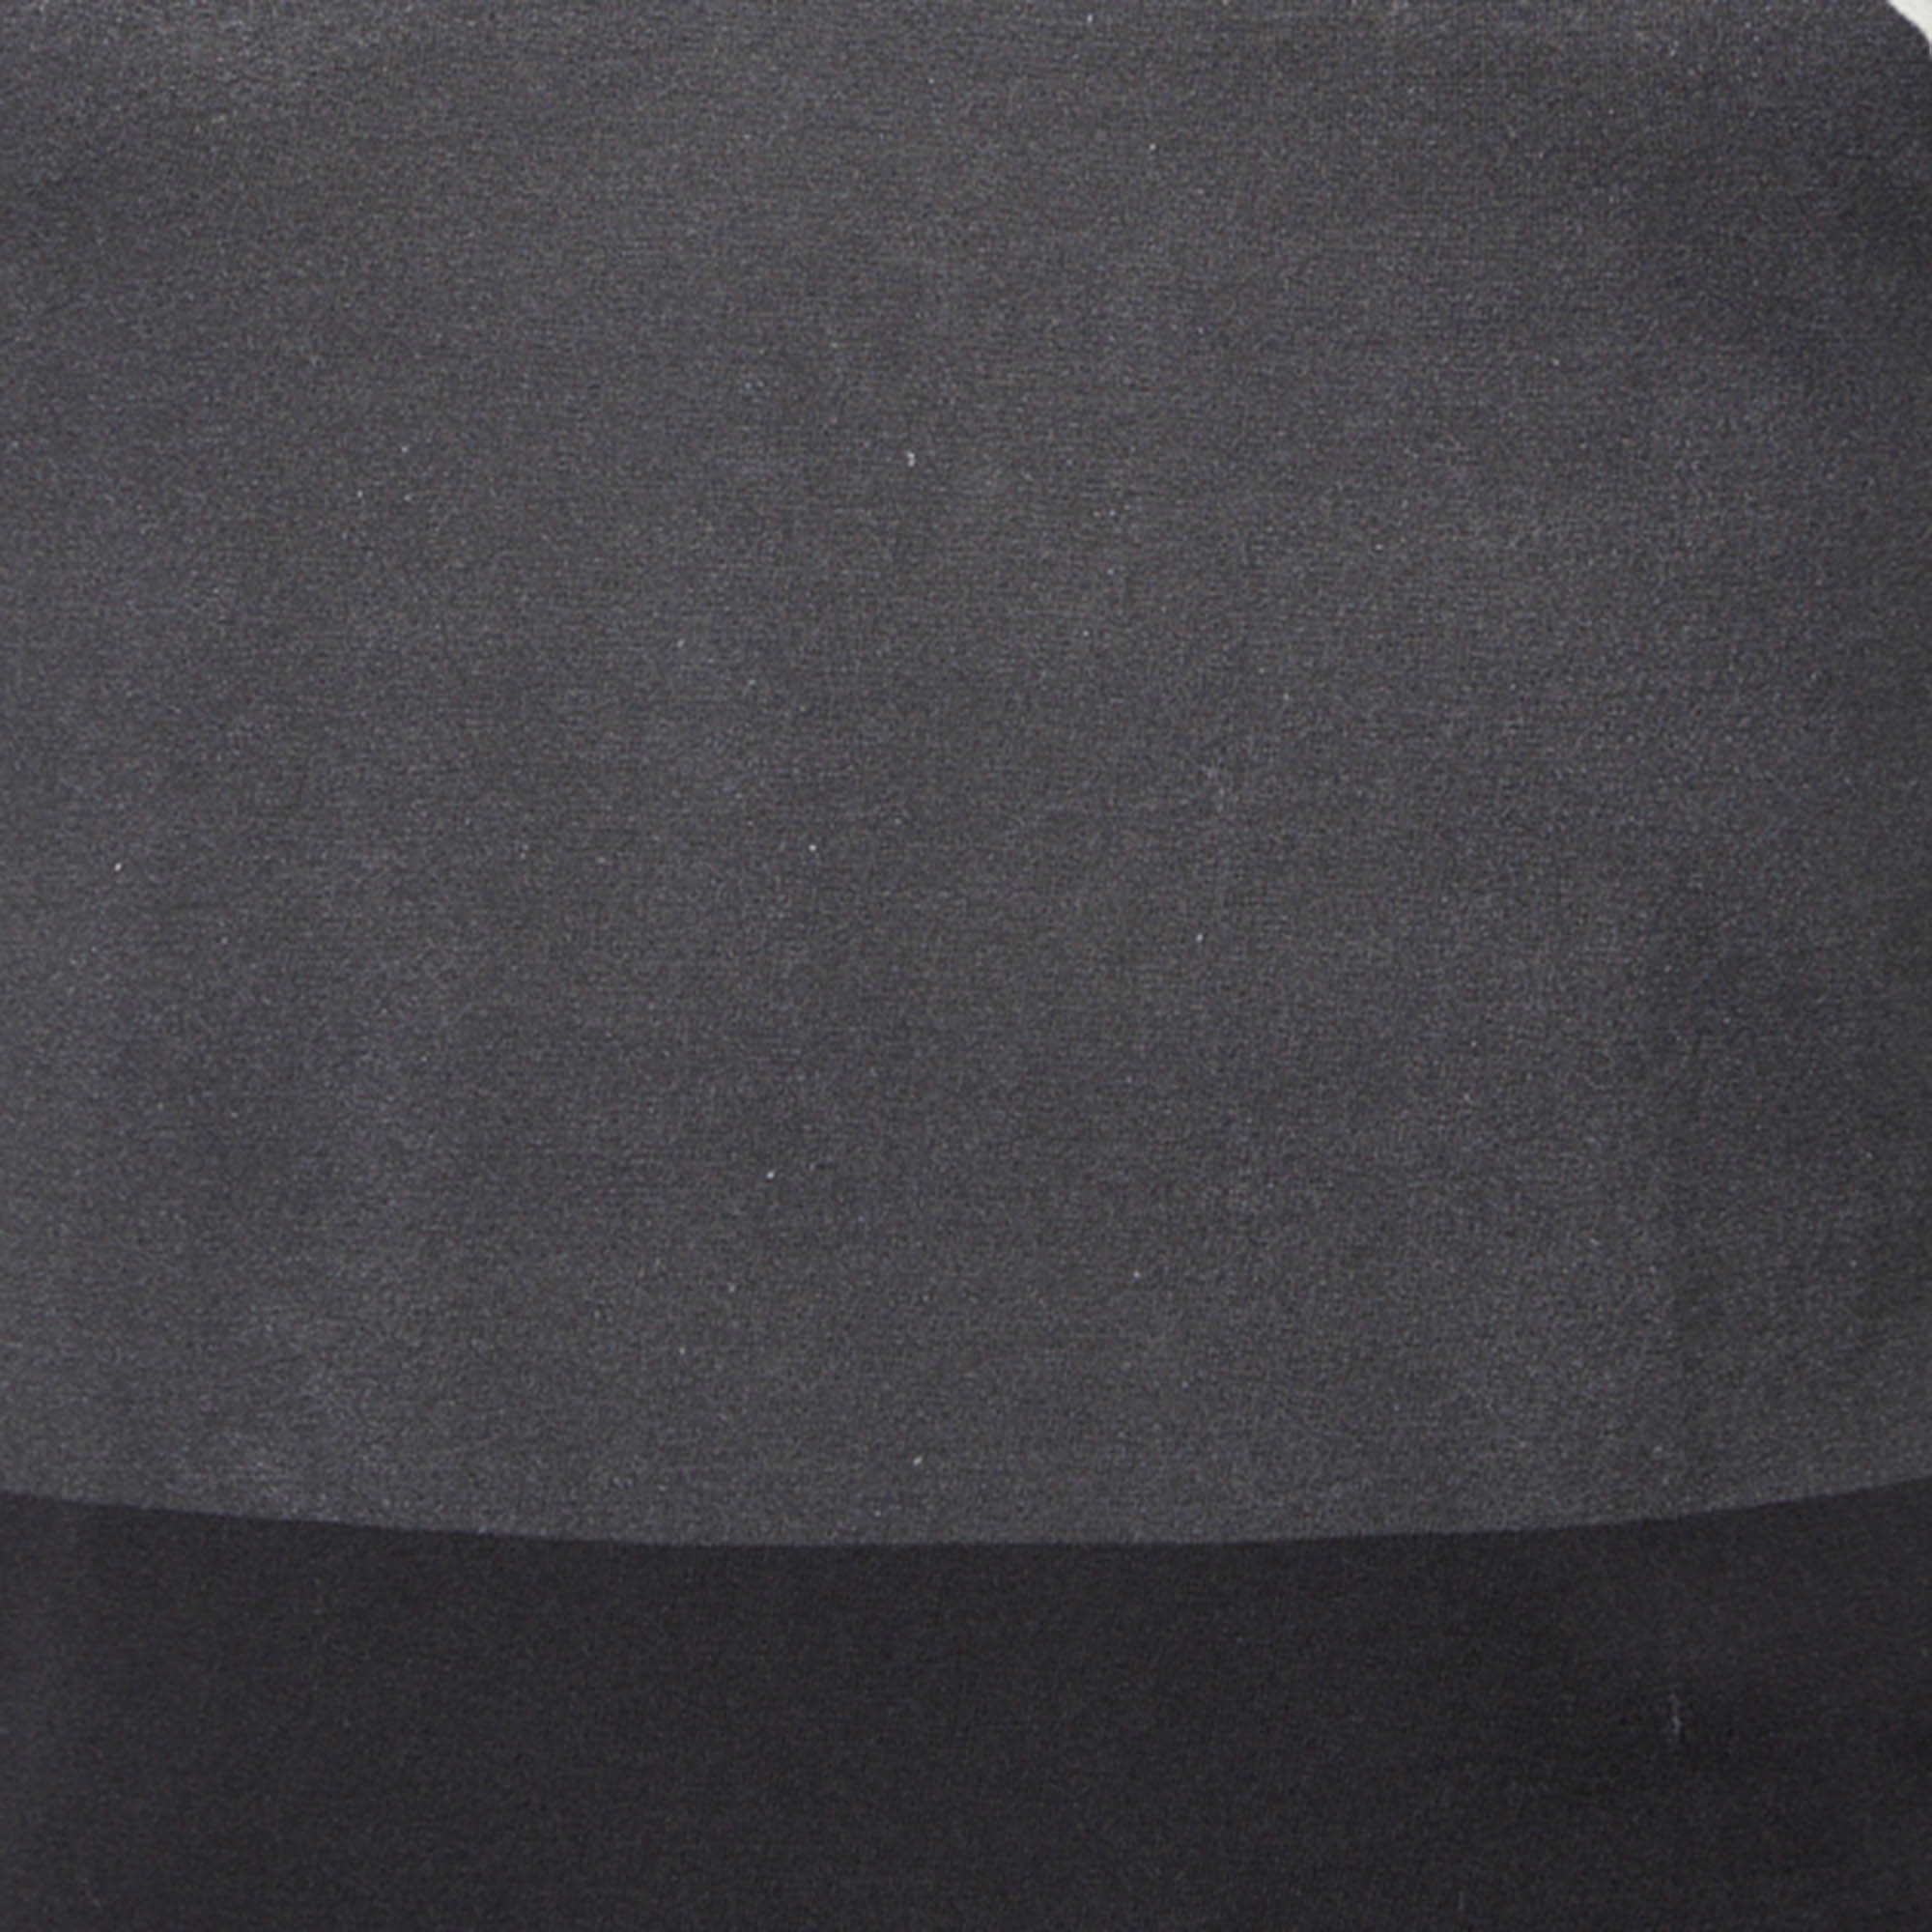 Dolce & Gabbana  Grey & Black Striped Floral Printed Cotton Round Neck T-Shirt XS